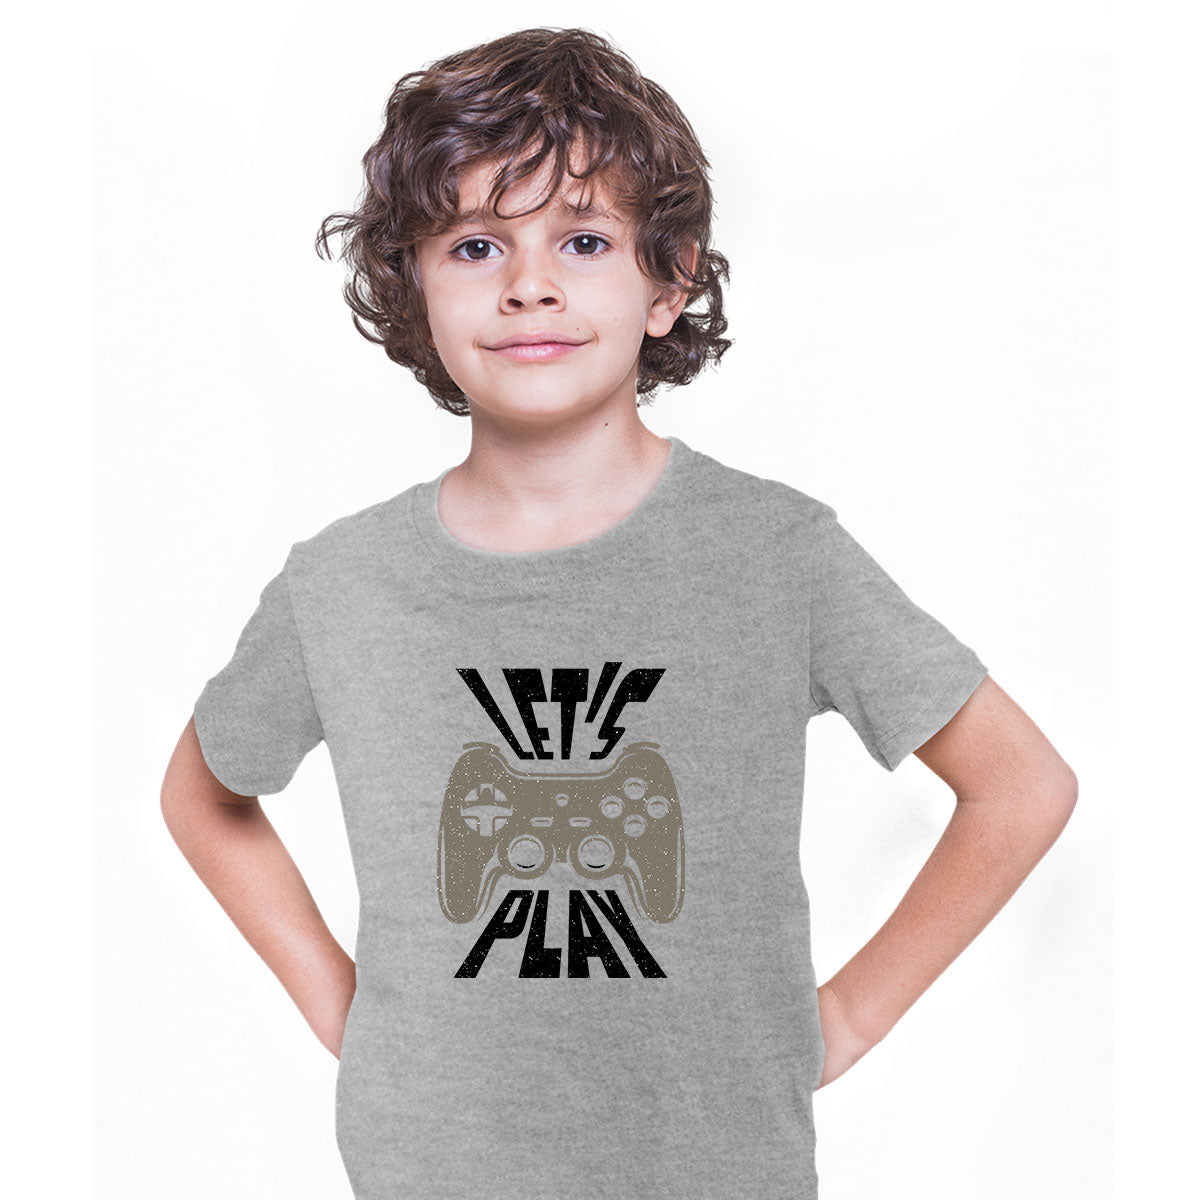 Kids Gaming T-Shirt Old School Gamer Retro Video Game Let's Play T-shirt for Kids - Kuzi Tees